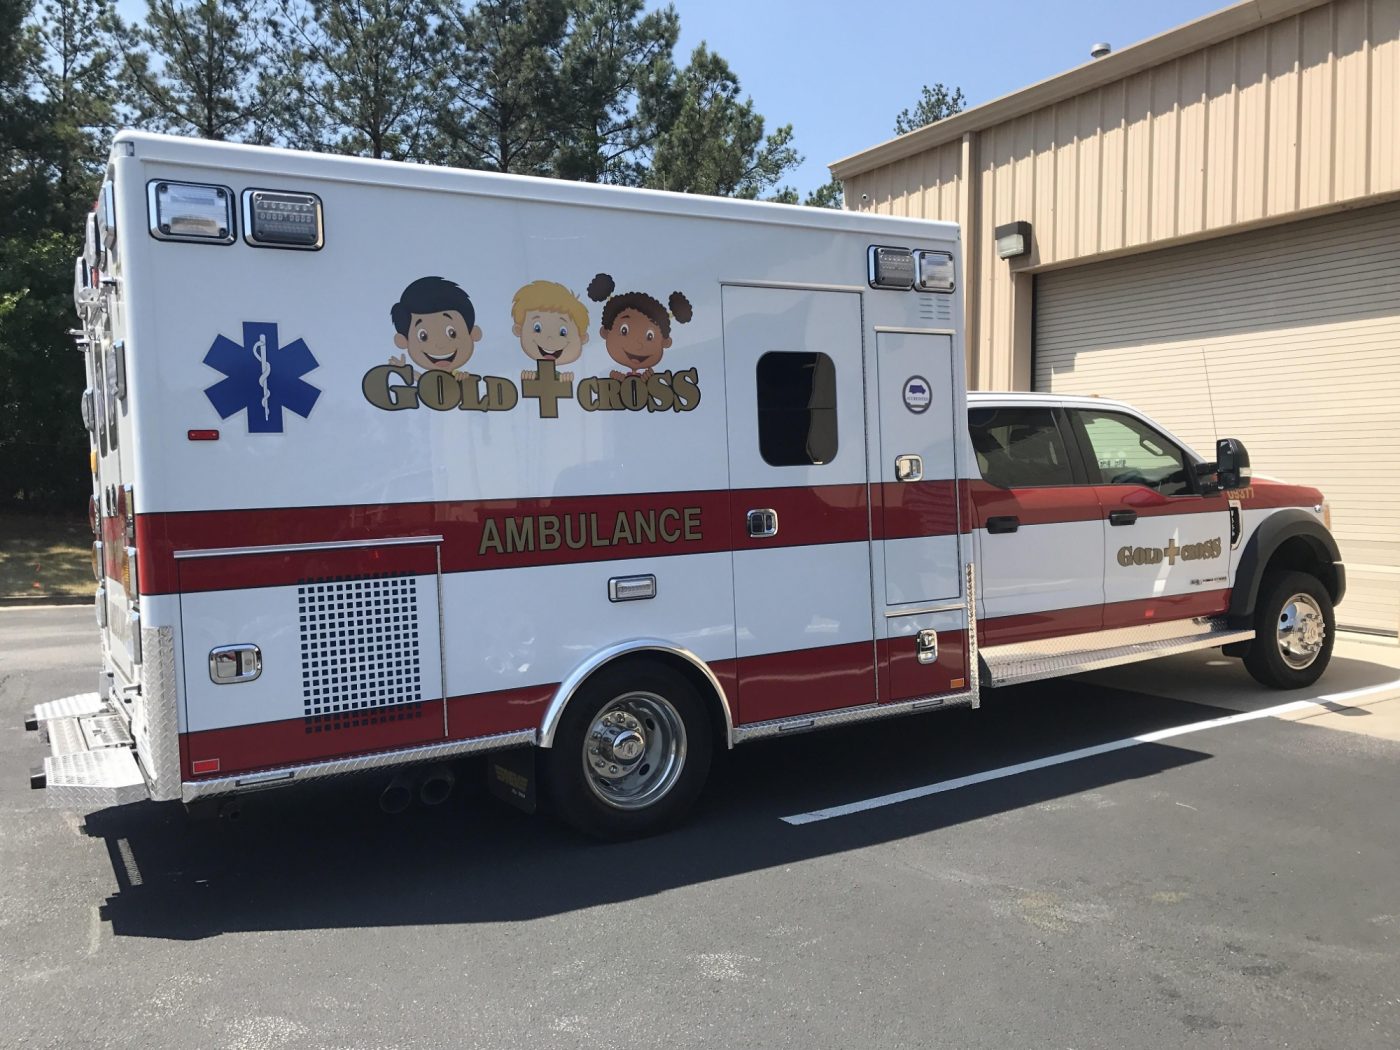 New Gold Cross ambulance unique in region